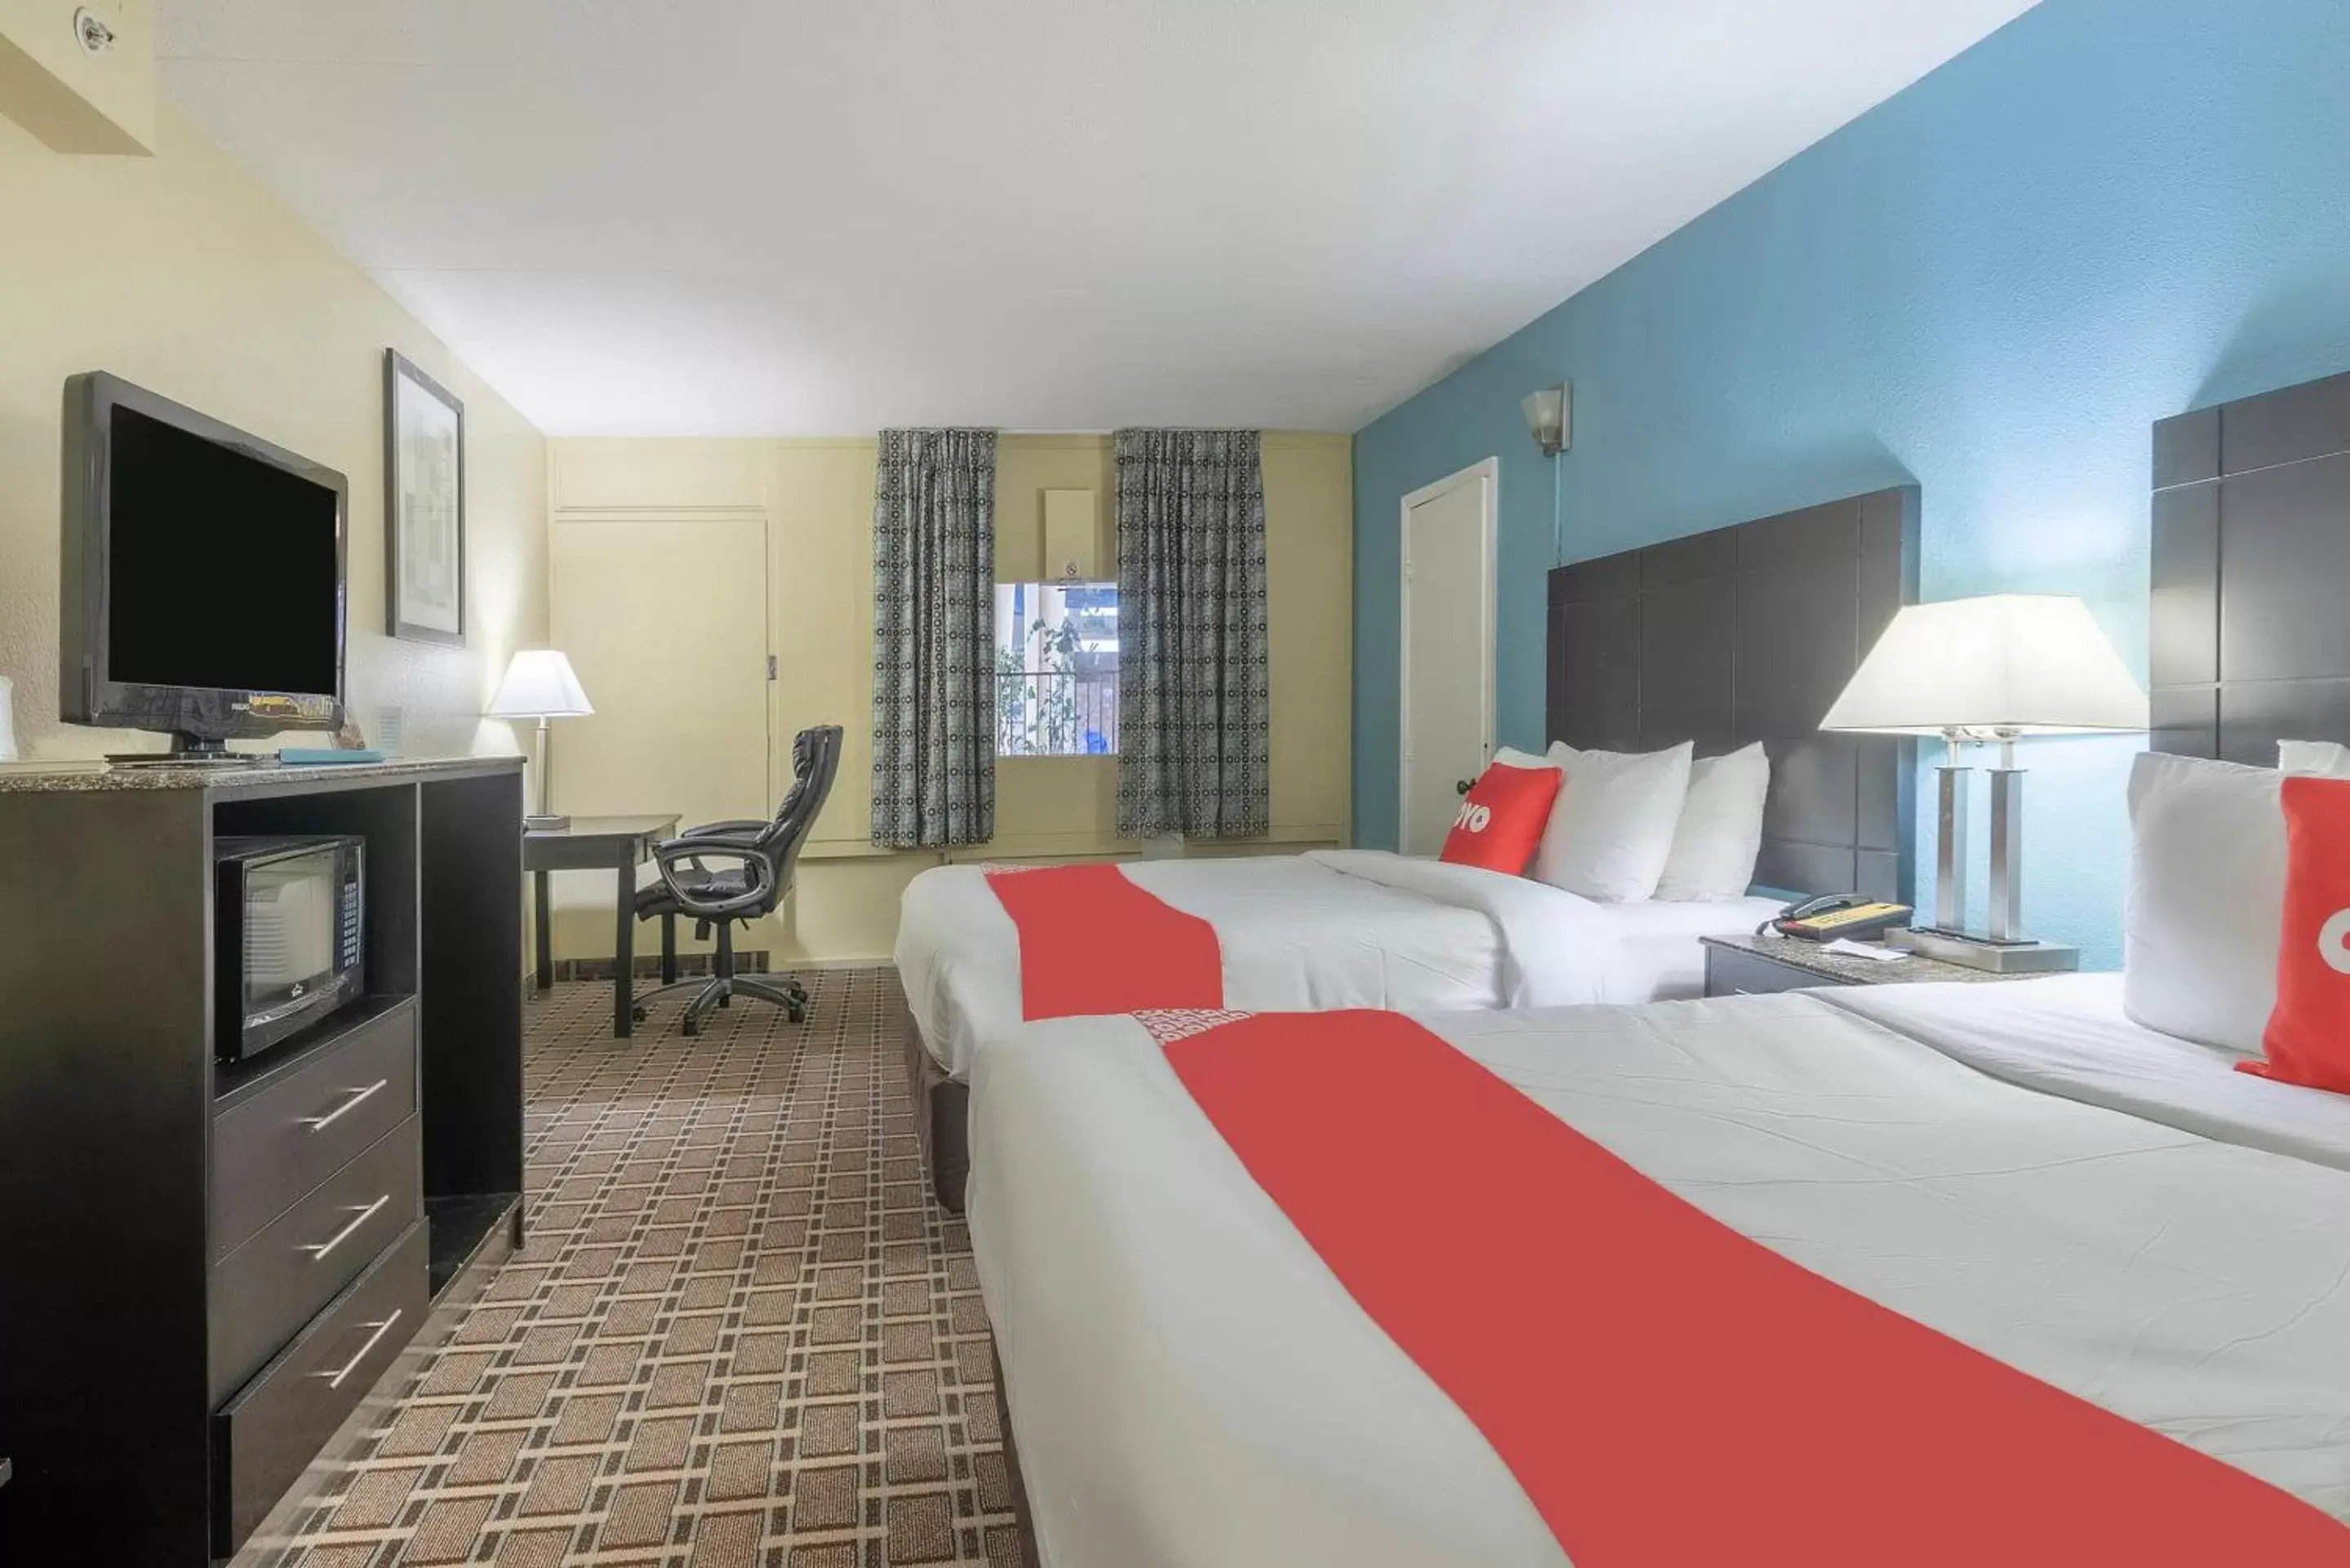 Bedroom, Bed in OYO Hotel Knoxville TN Cedar Bluff I-40